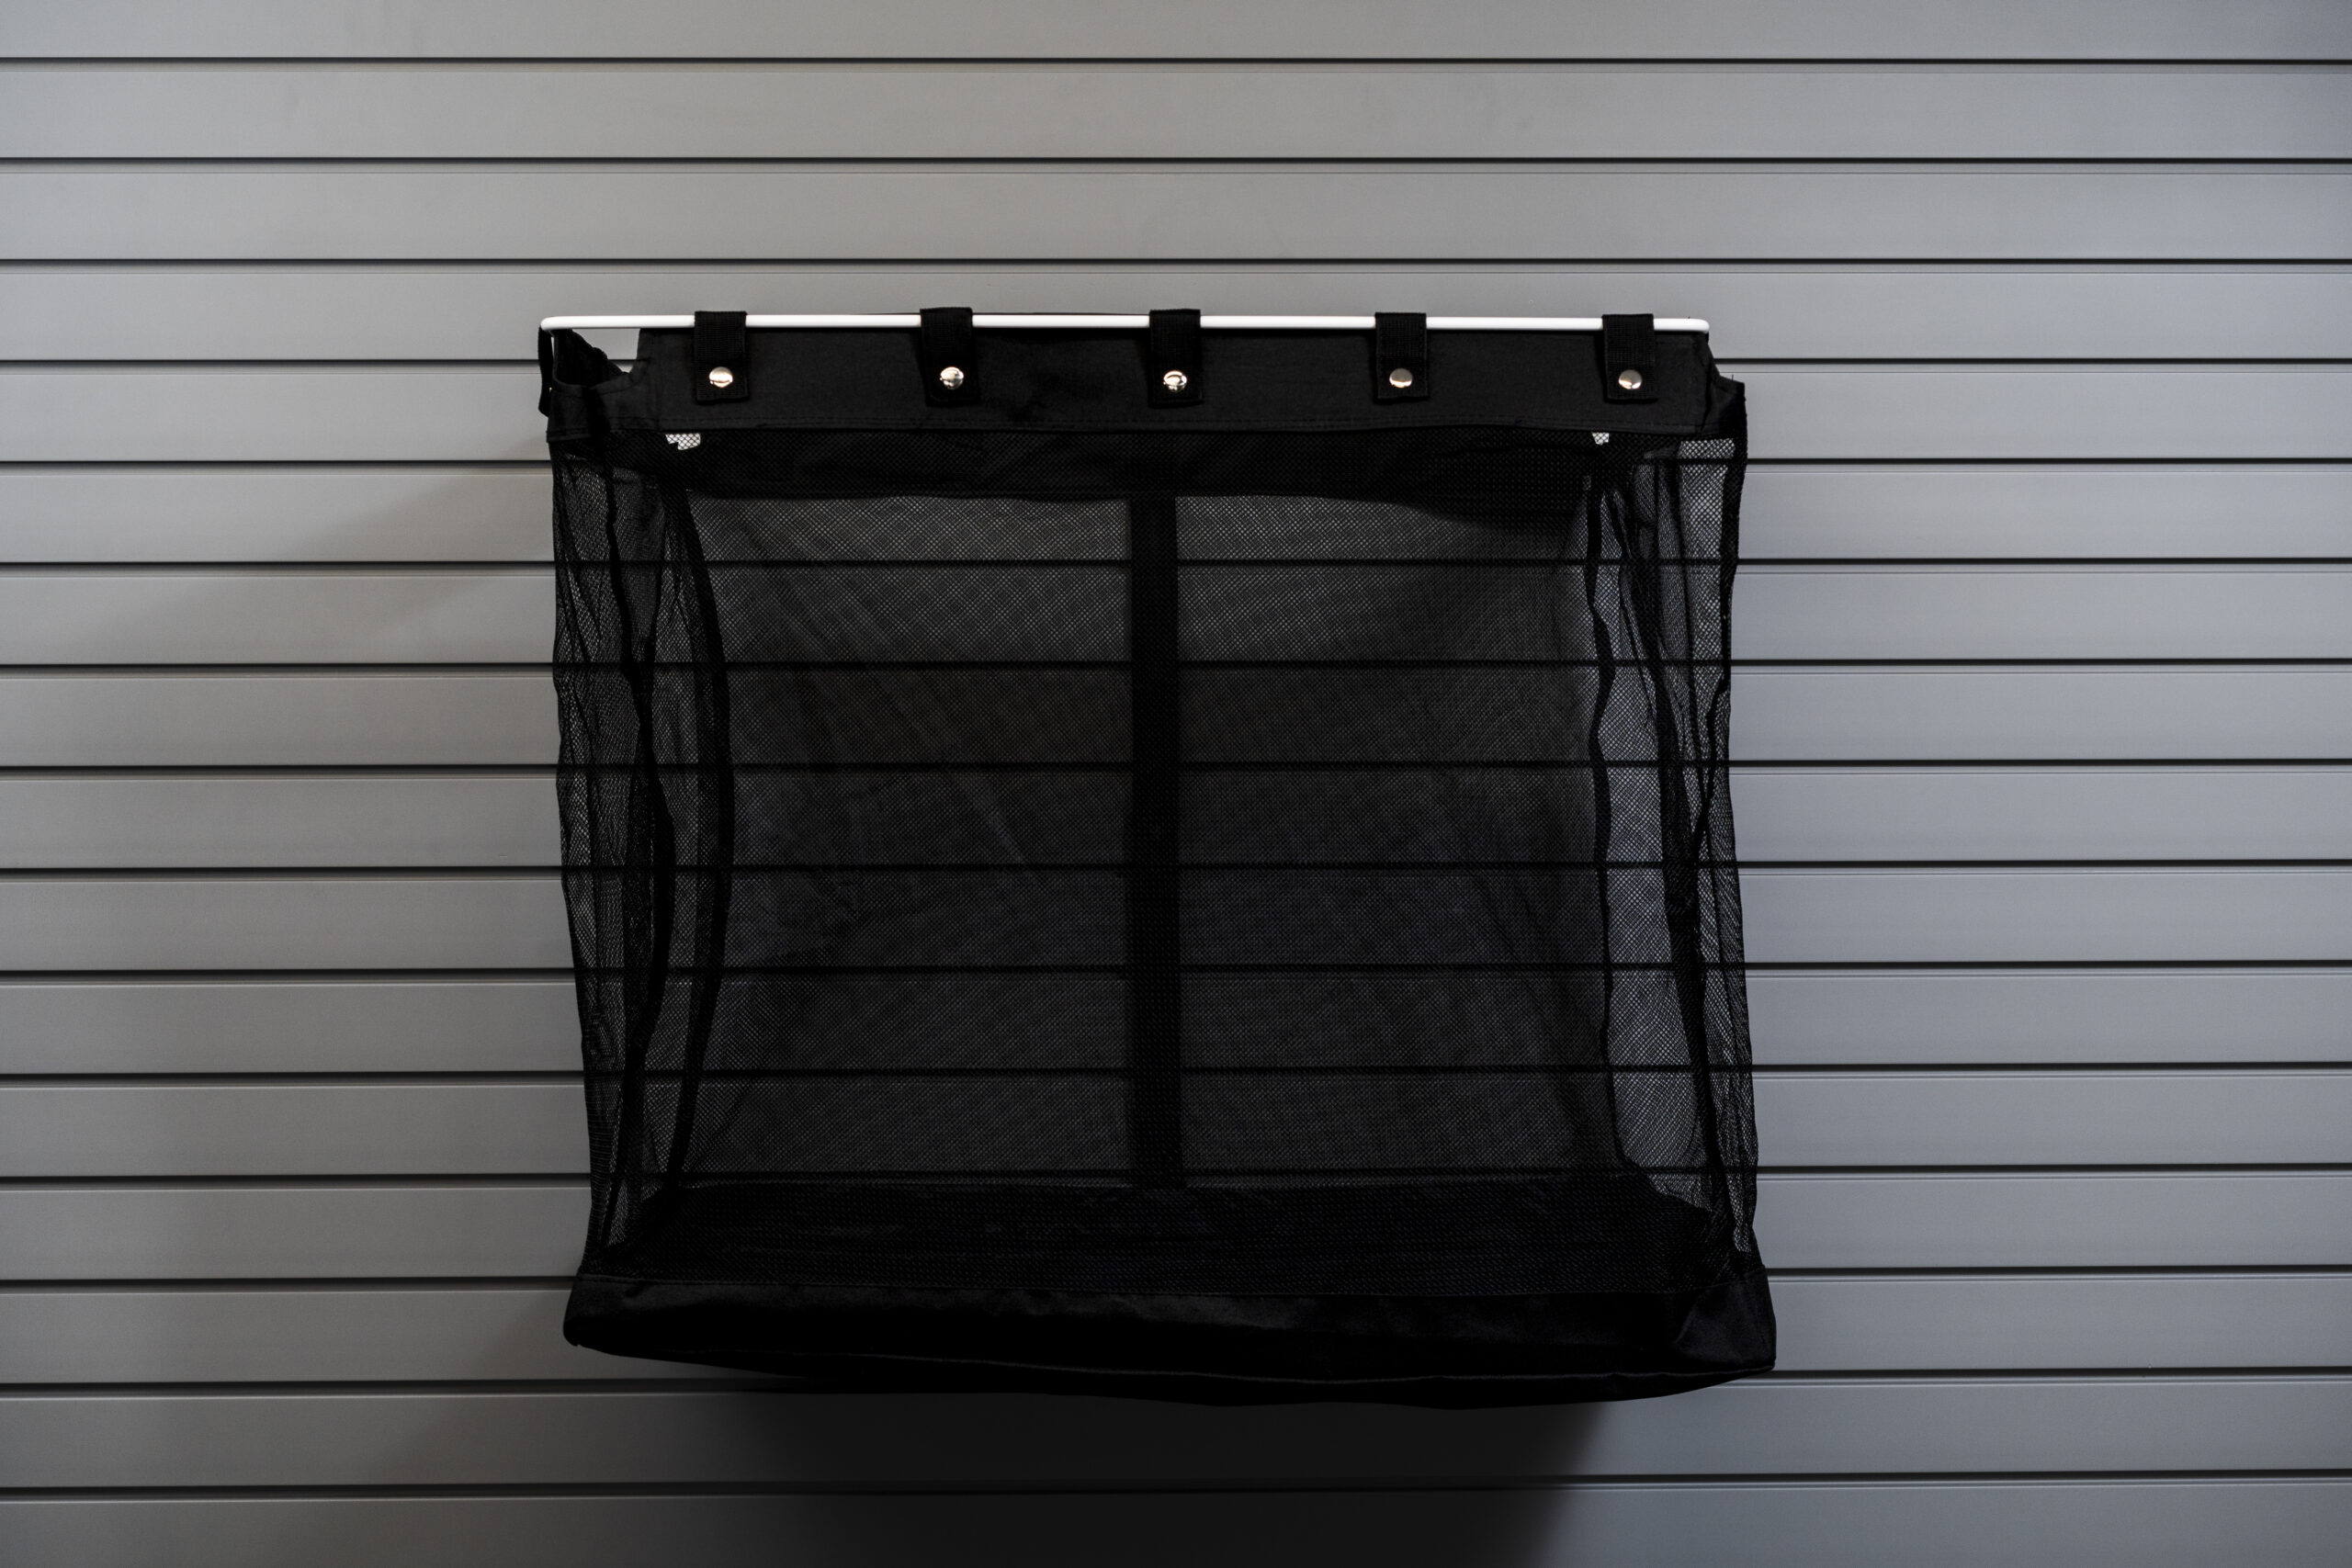 Deep mesh storage basket on slatwall